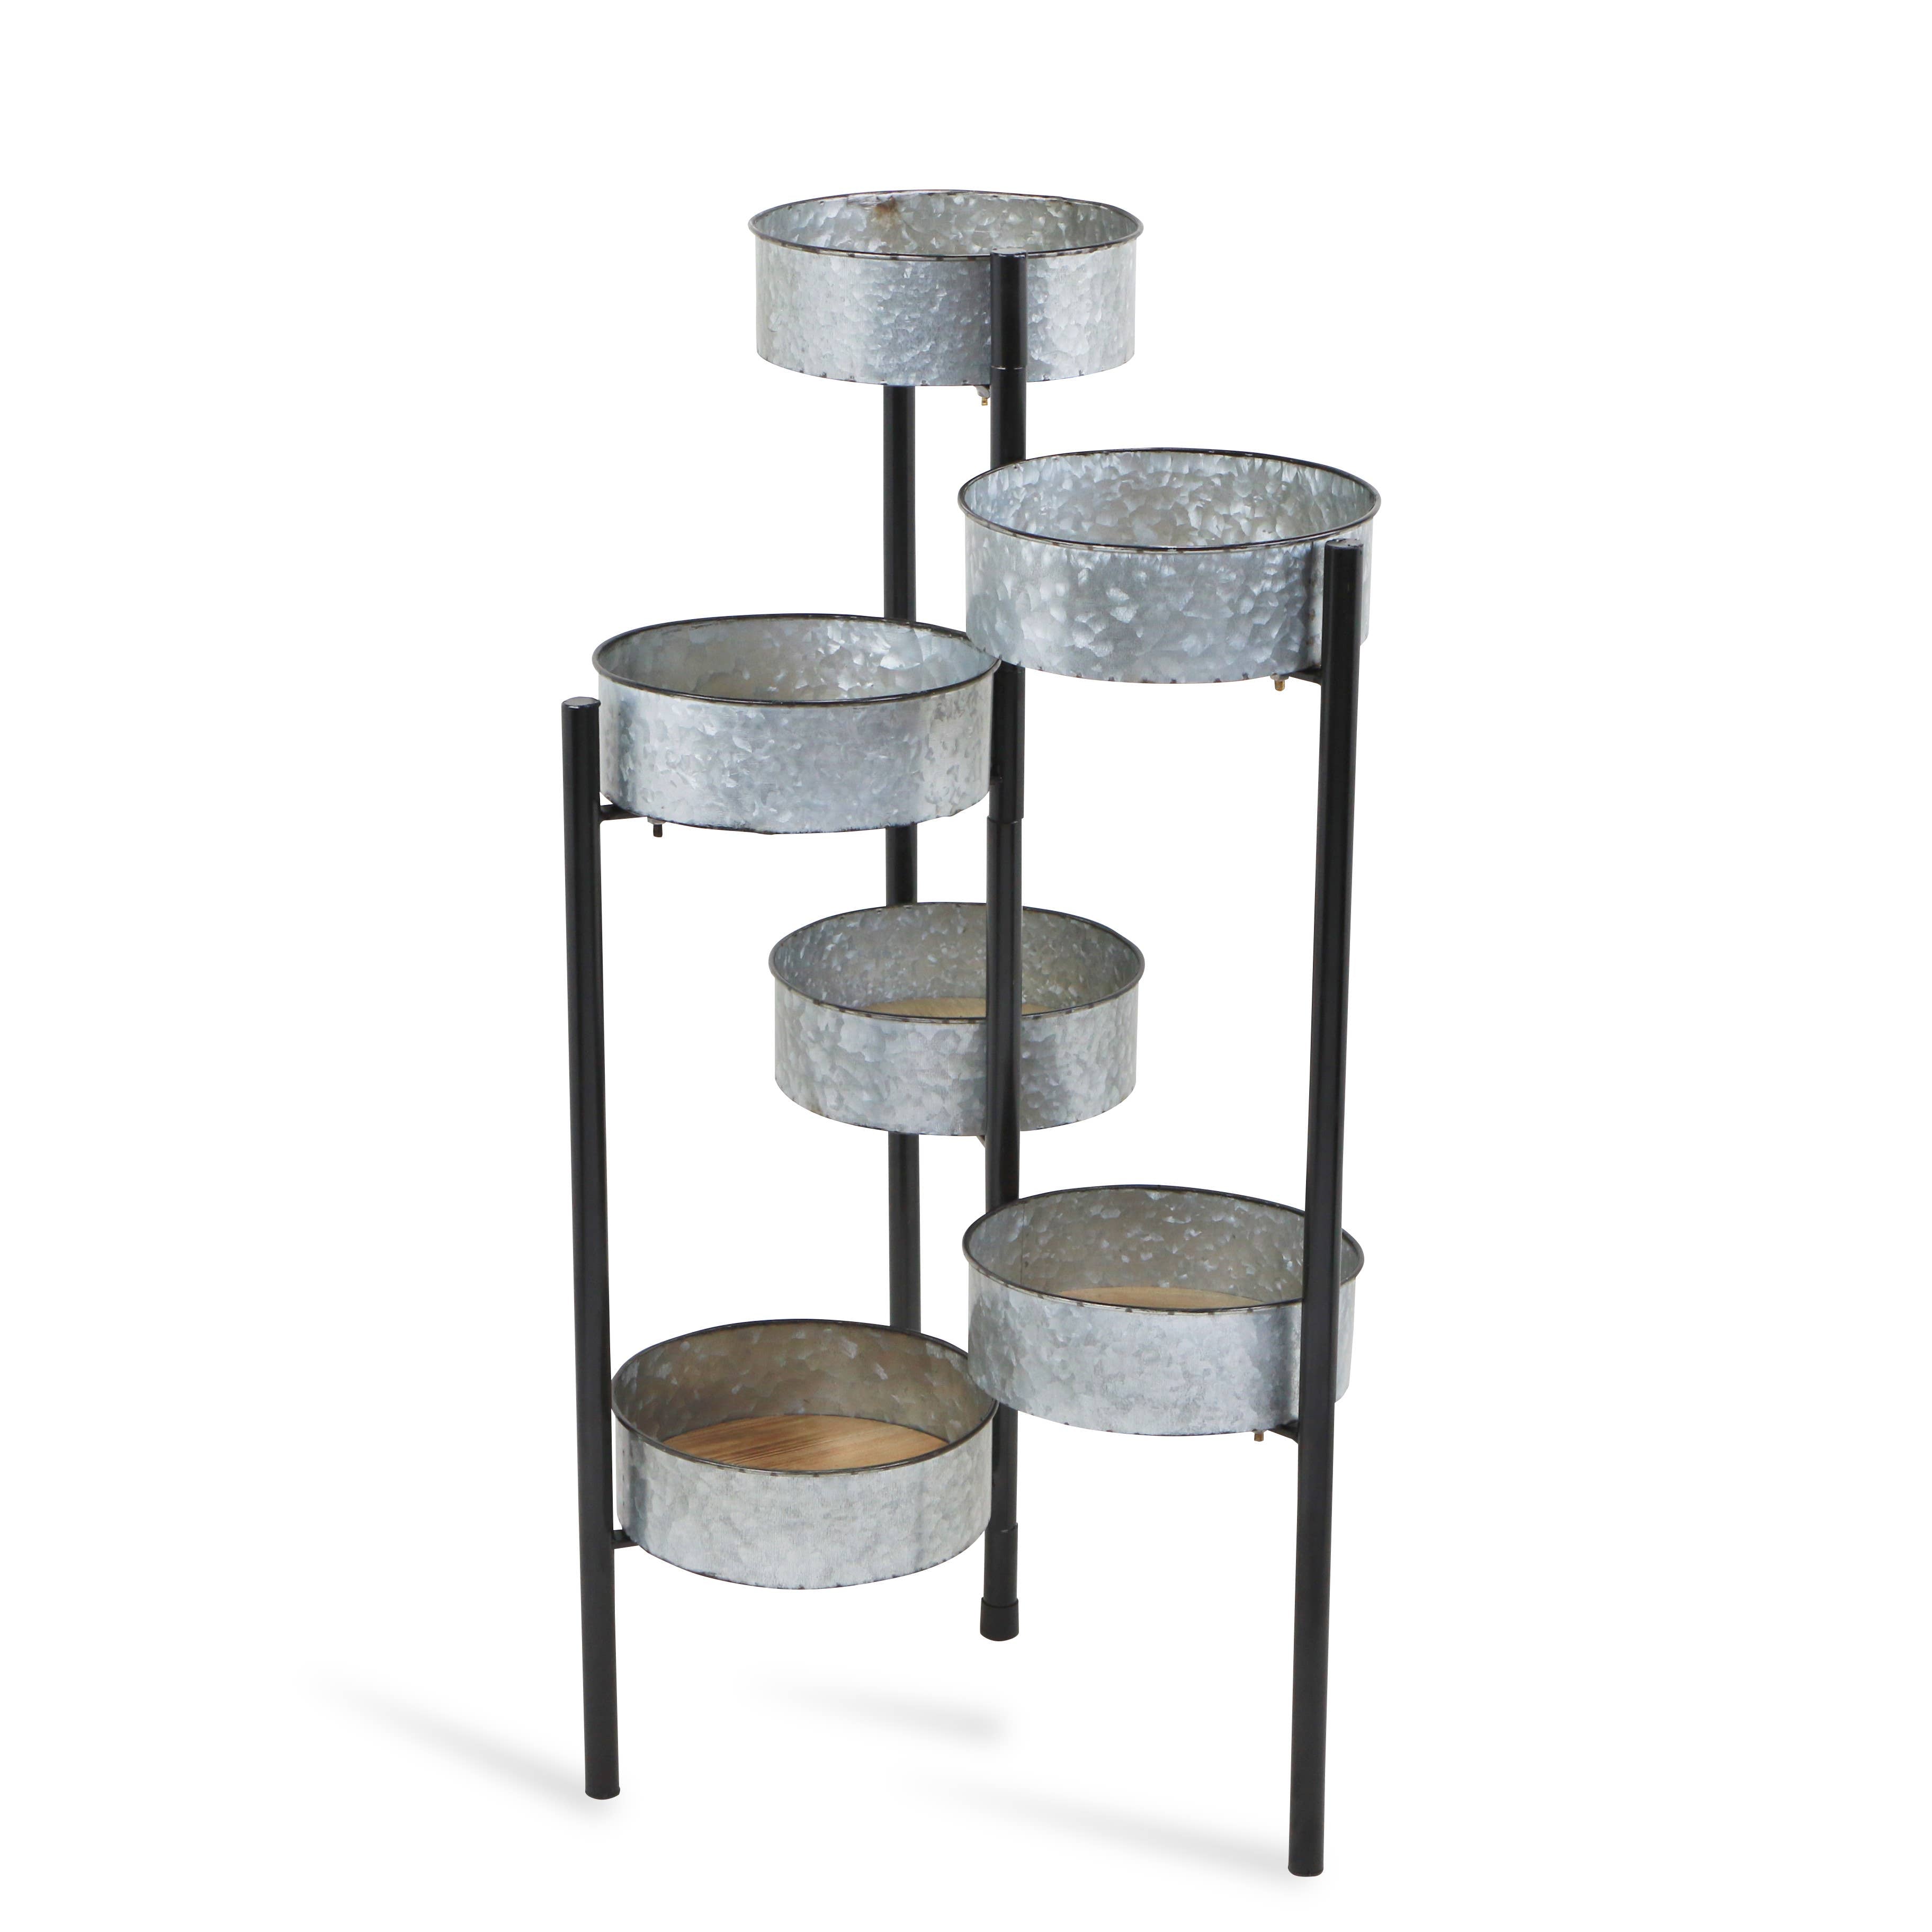 6 Pot Metal Folding Plant Stand